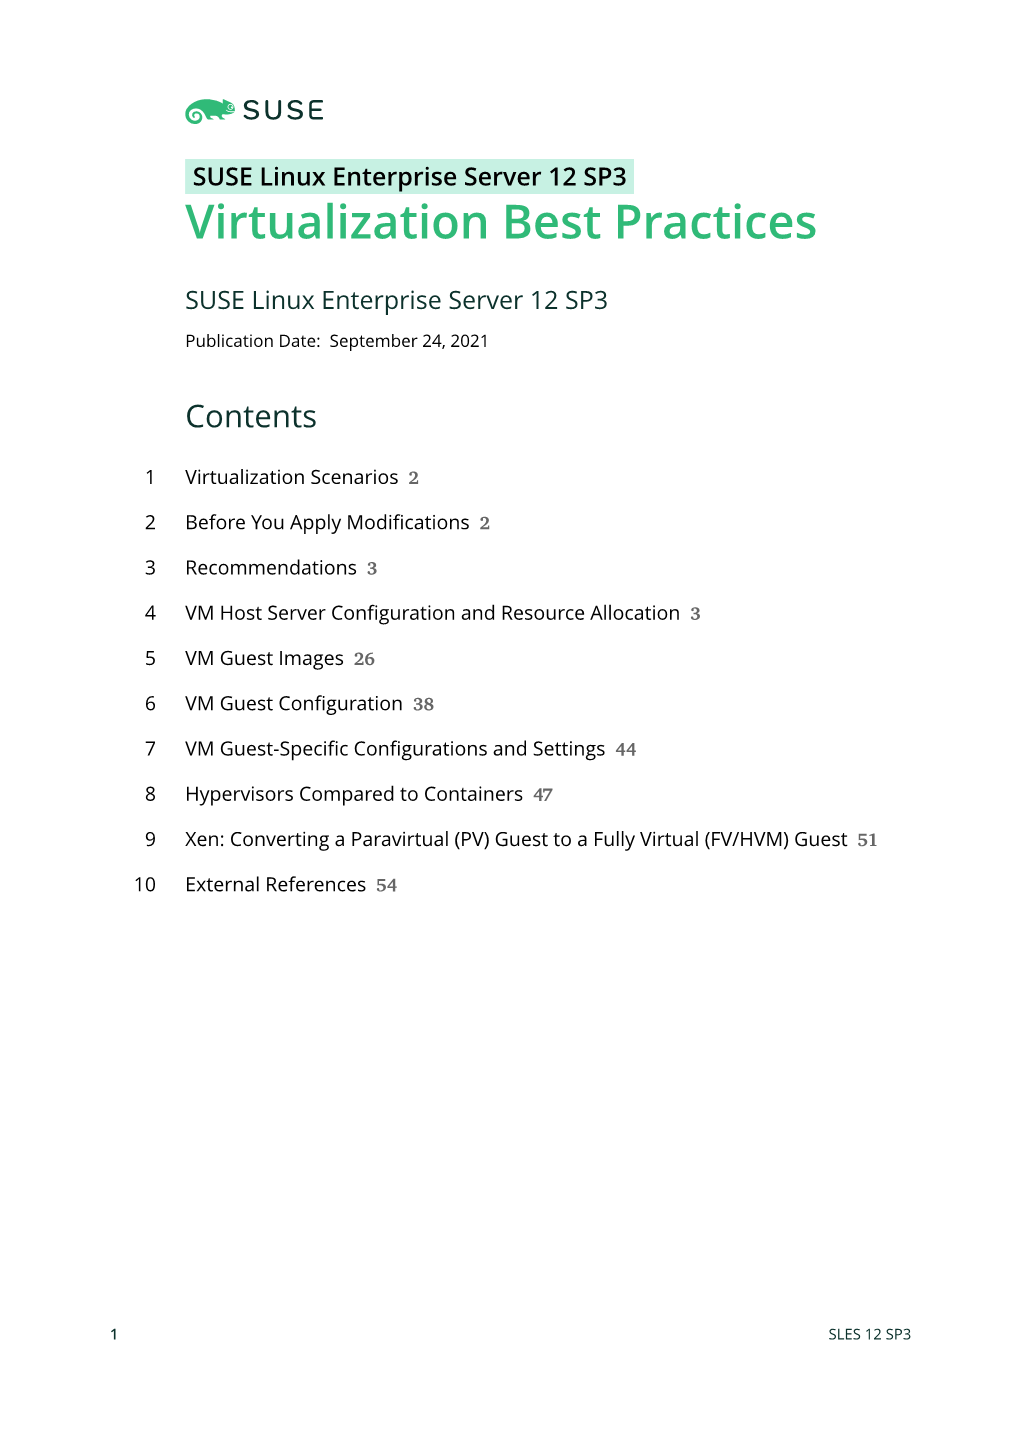 Virtualization Best Practices